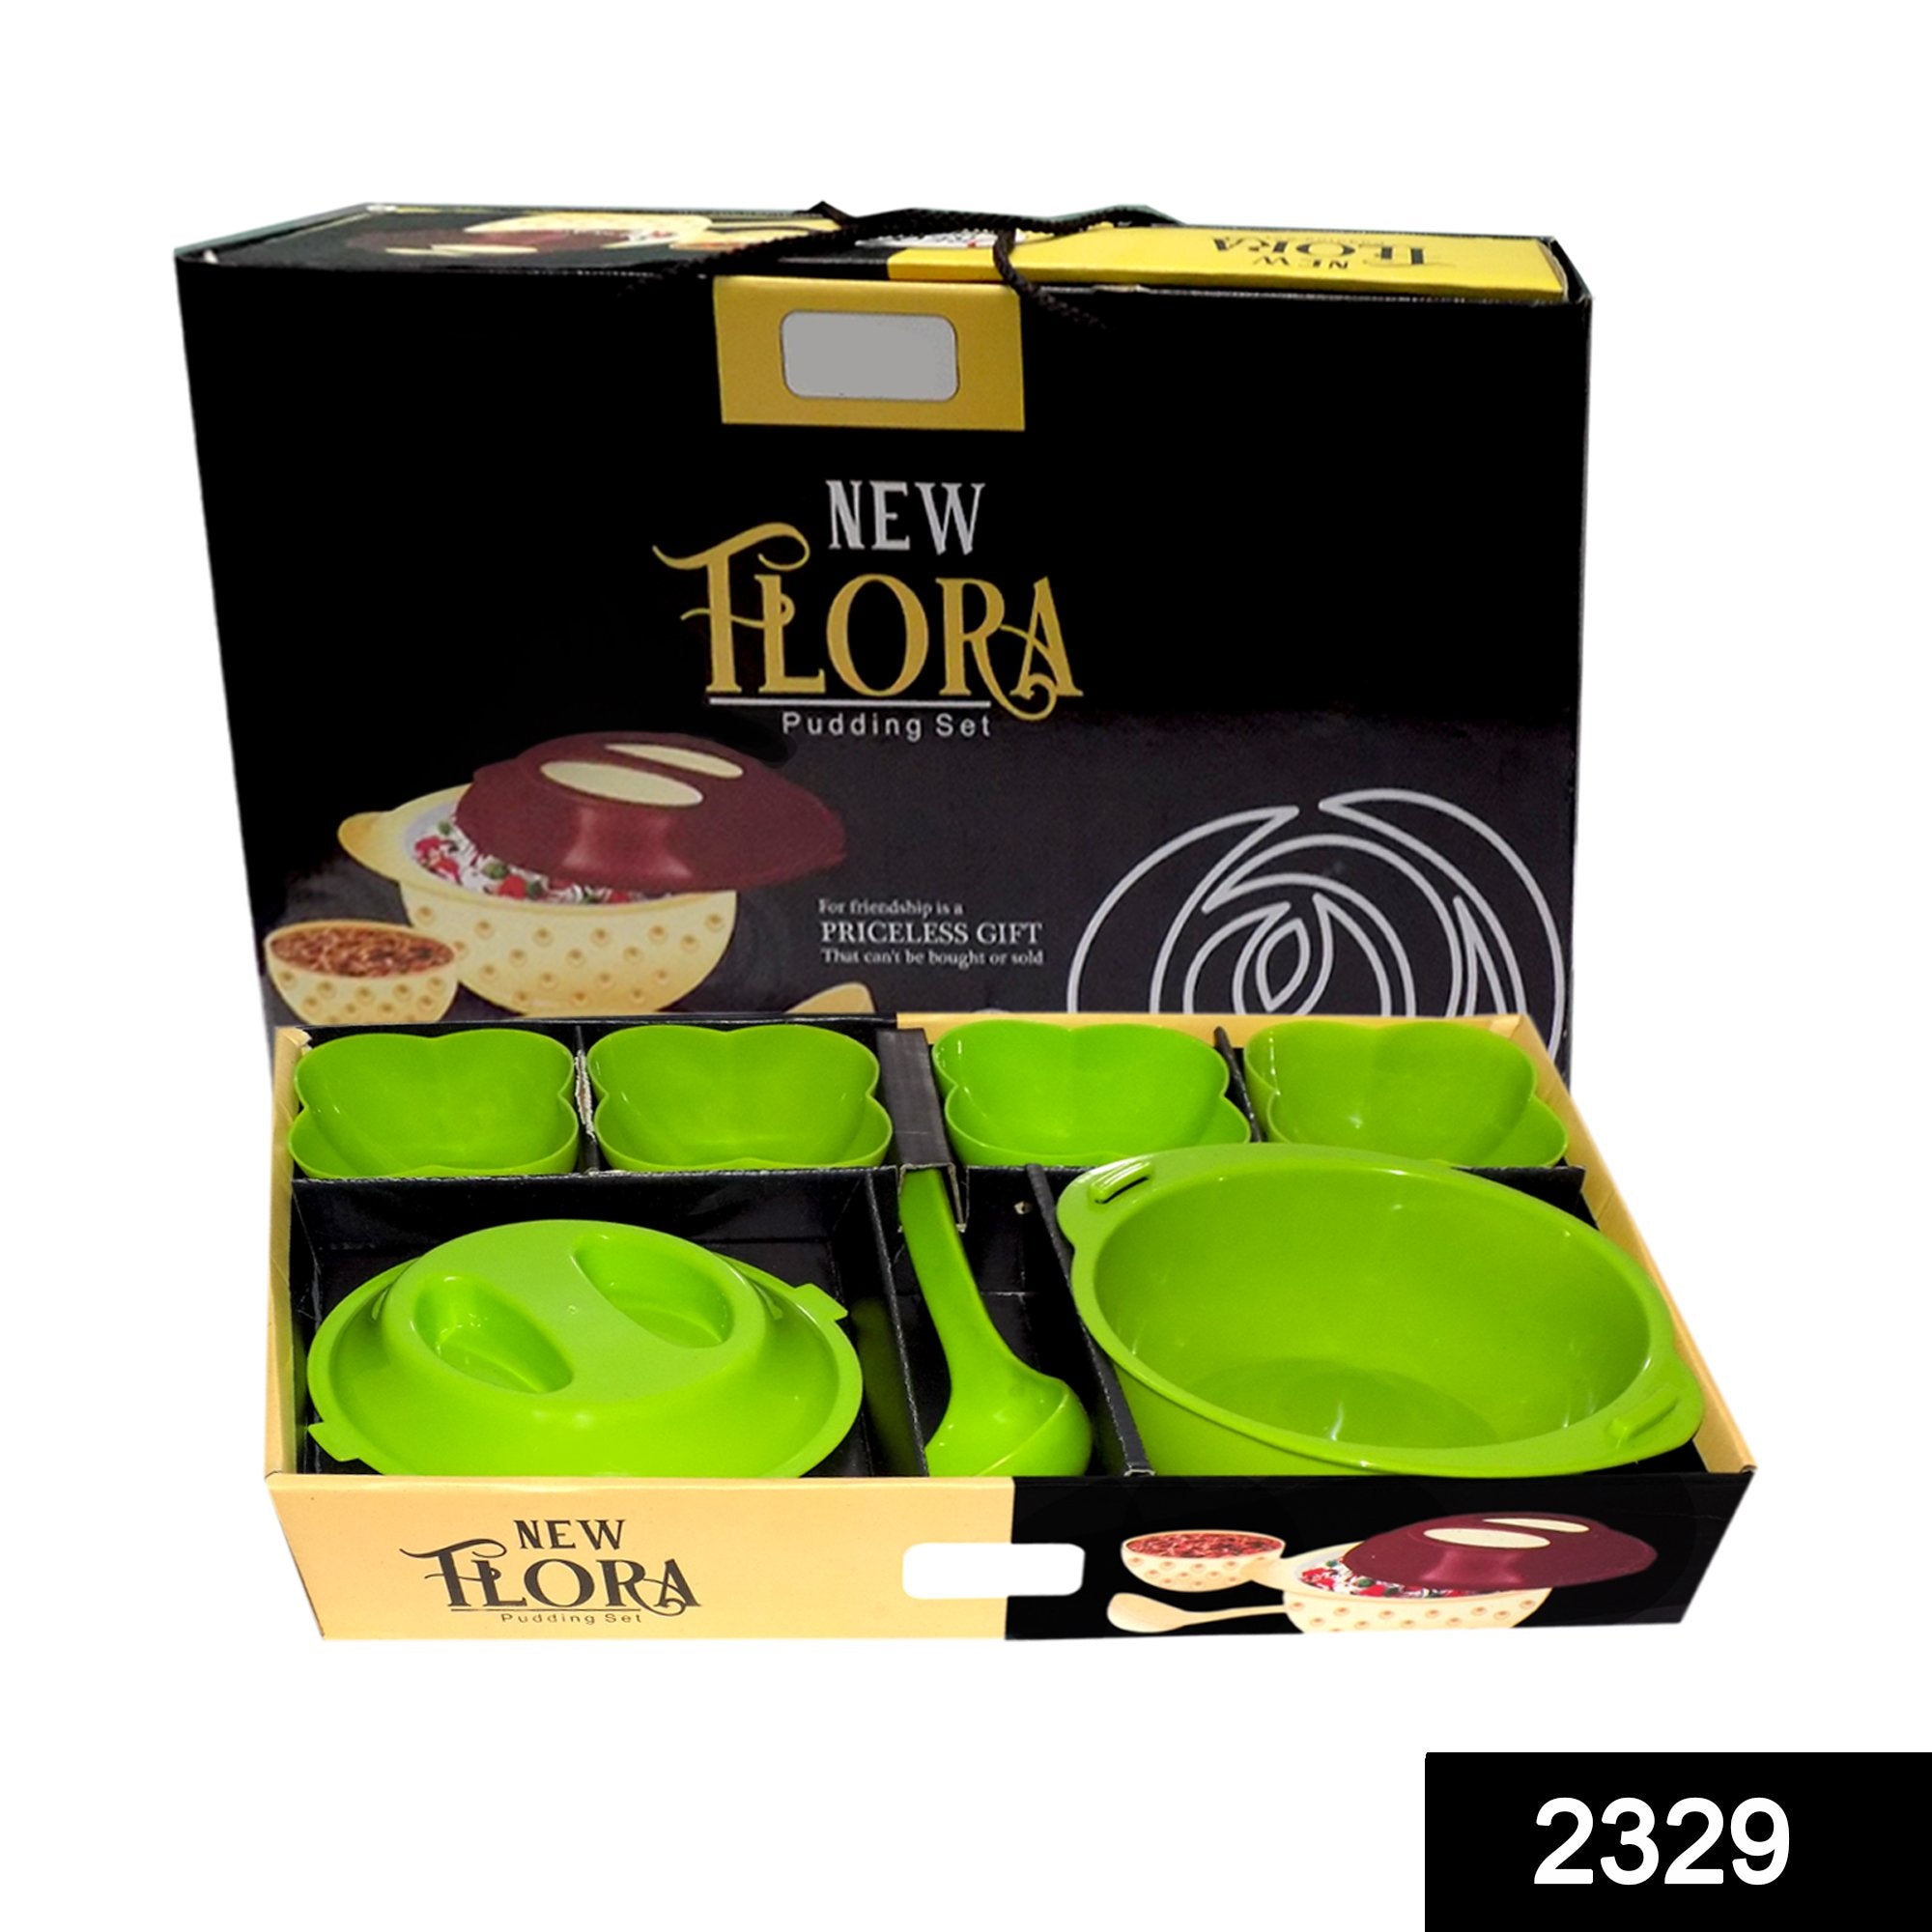 2329 stain resistant flora pudding set set for kitchen set of 7